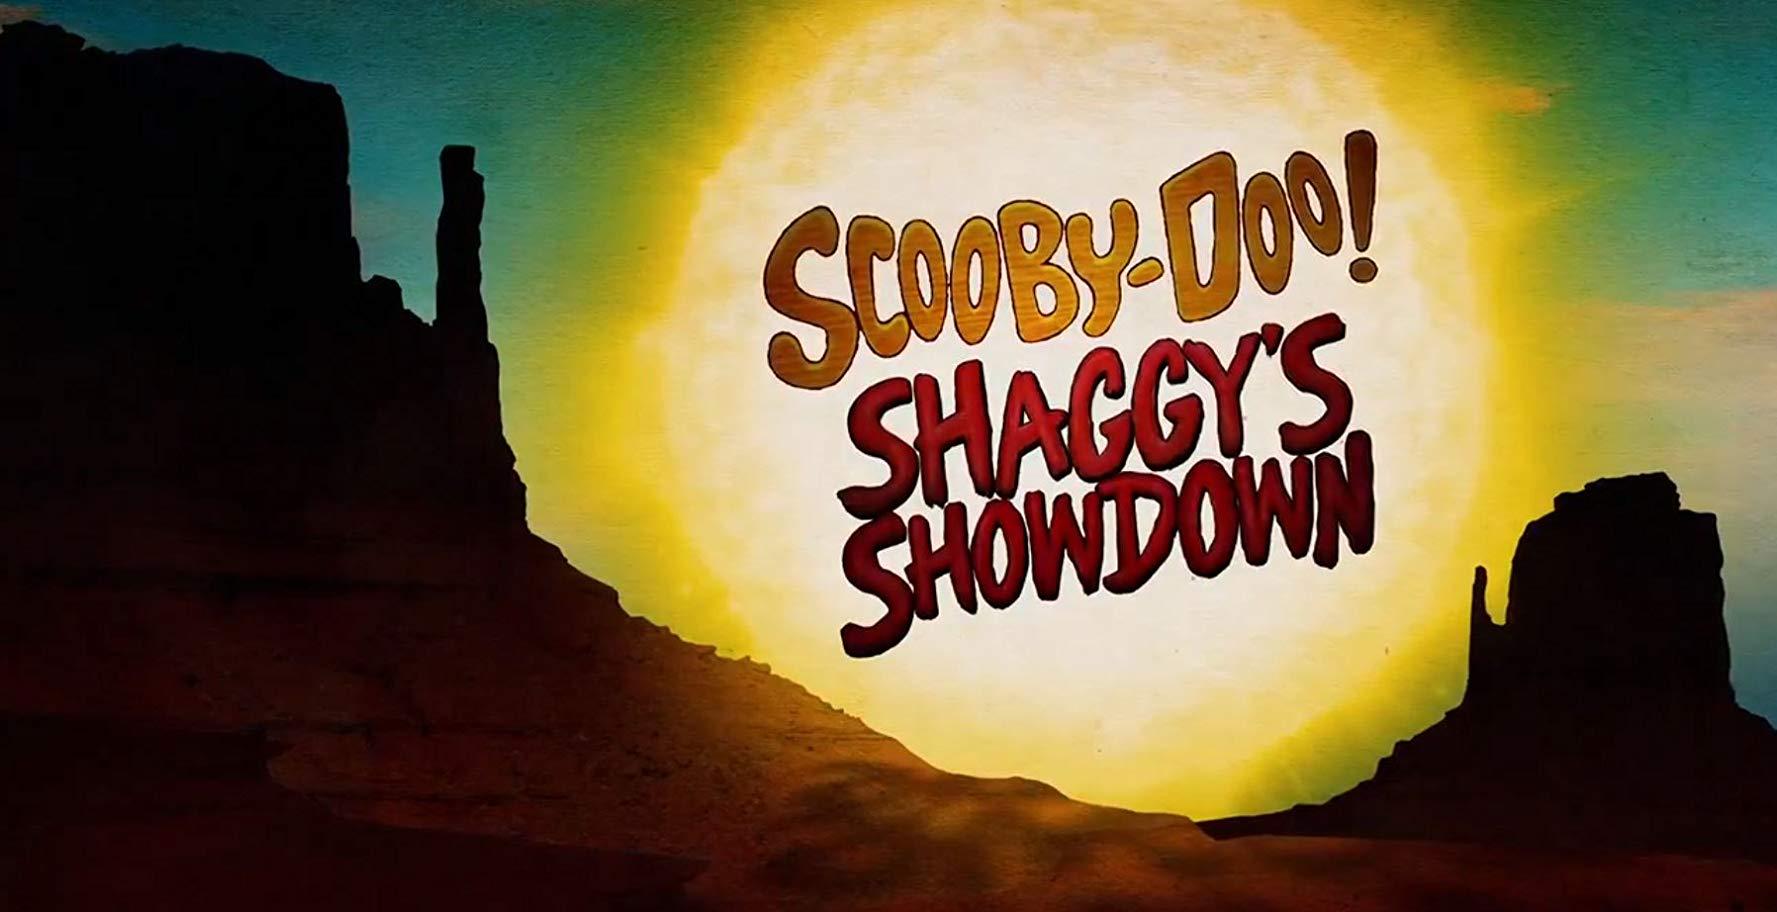 مشاهدة فيلم Scooby-Doo! Shaggy’s Showdown (2017) مترجم HD اون لاين